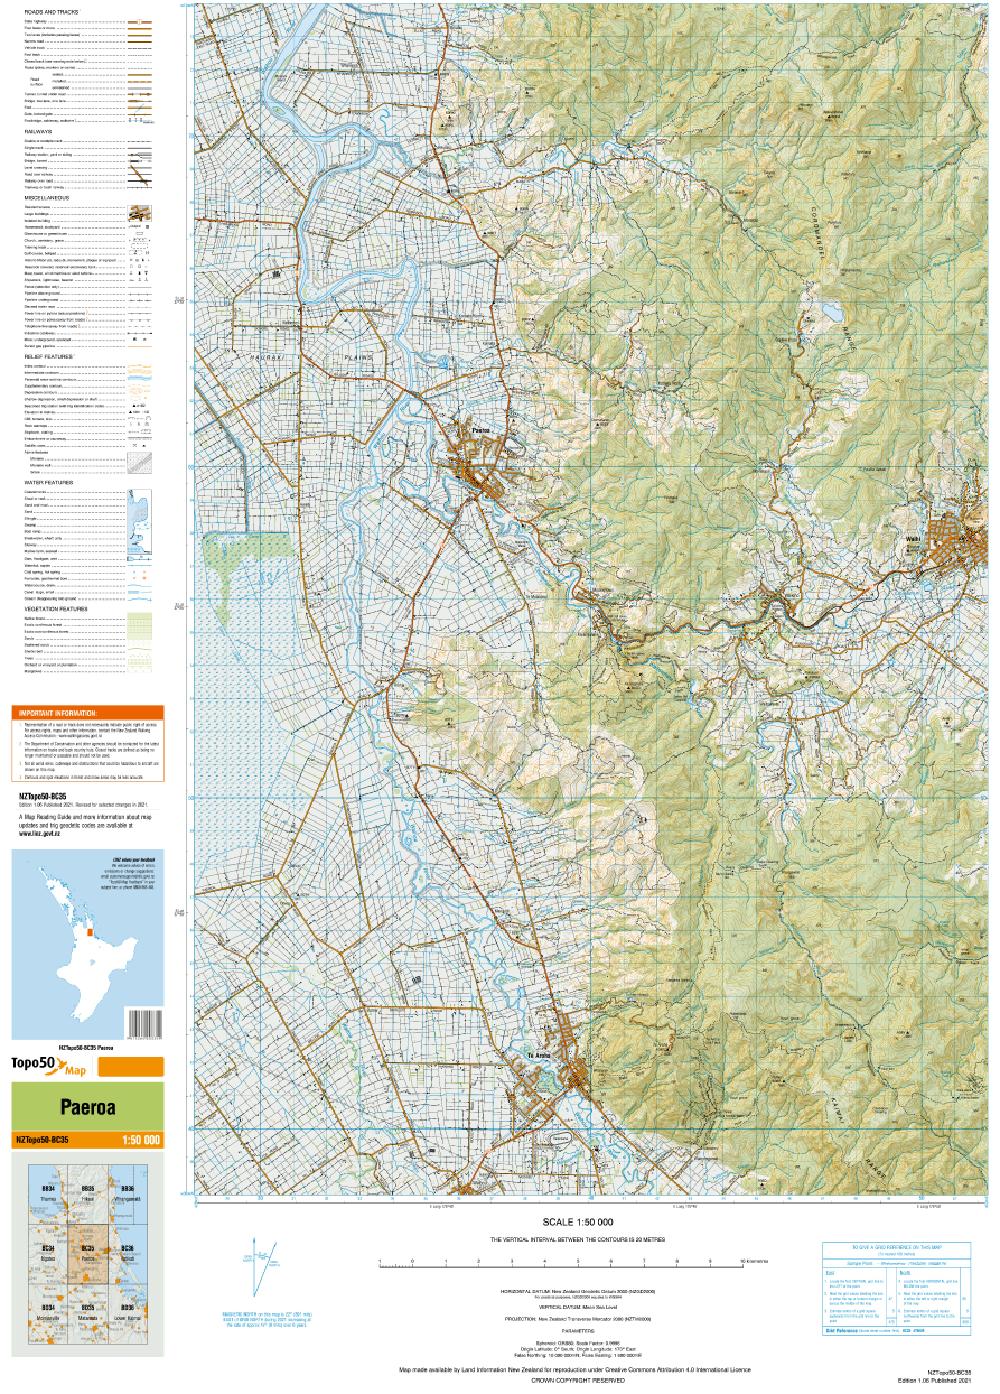 Topo map of Paeroa